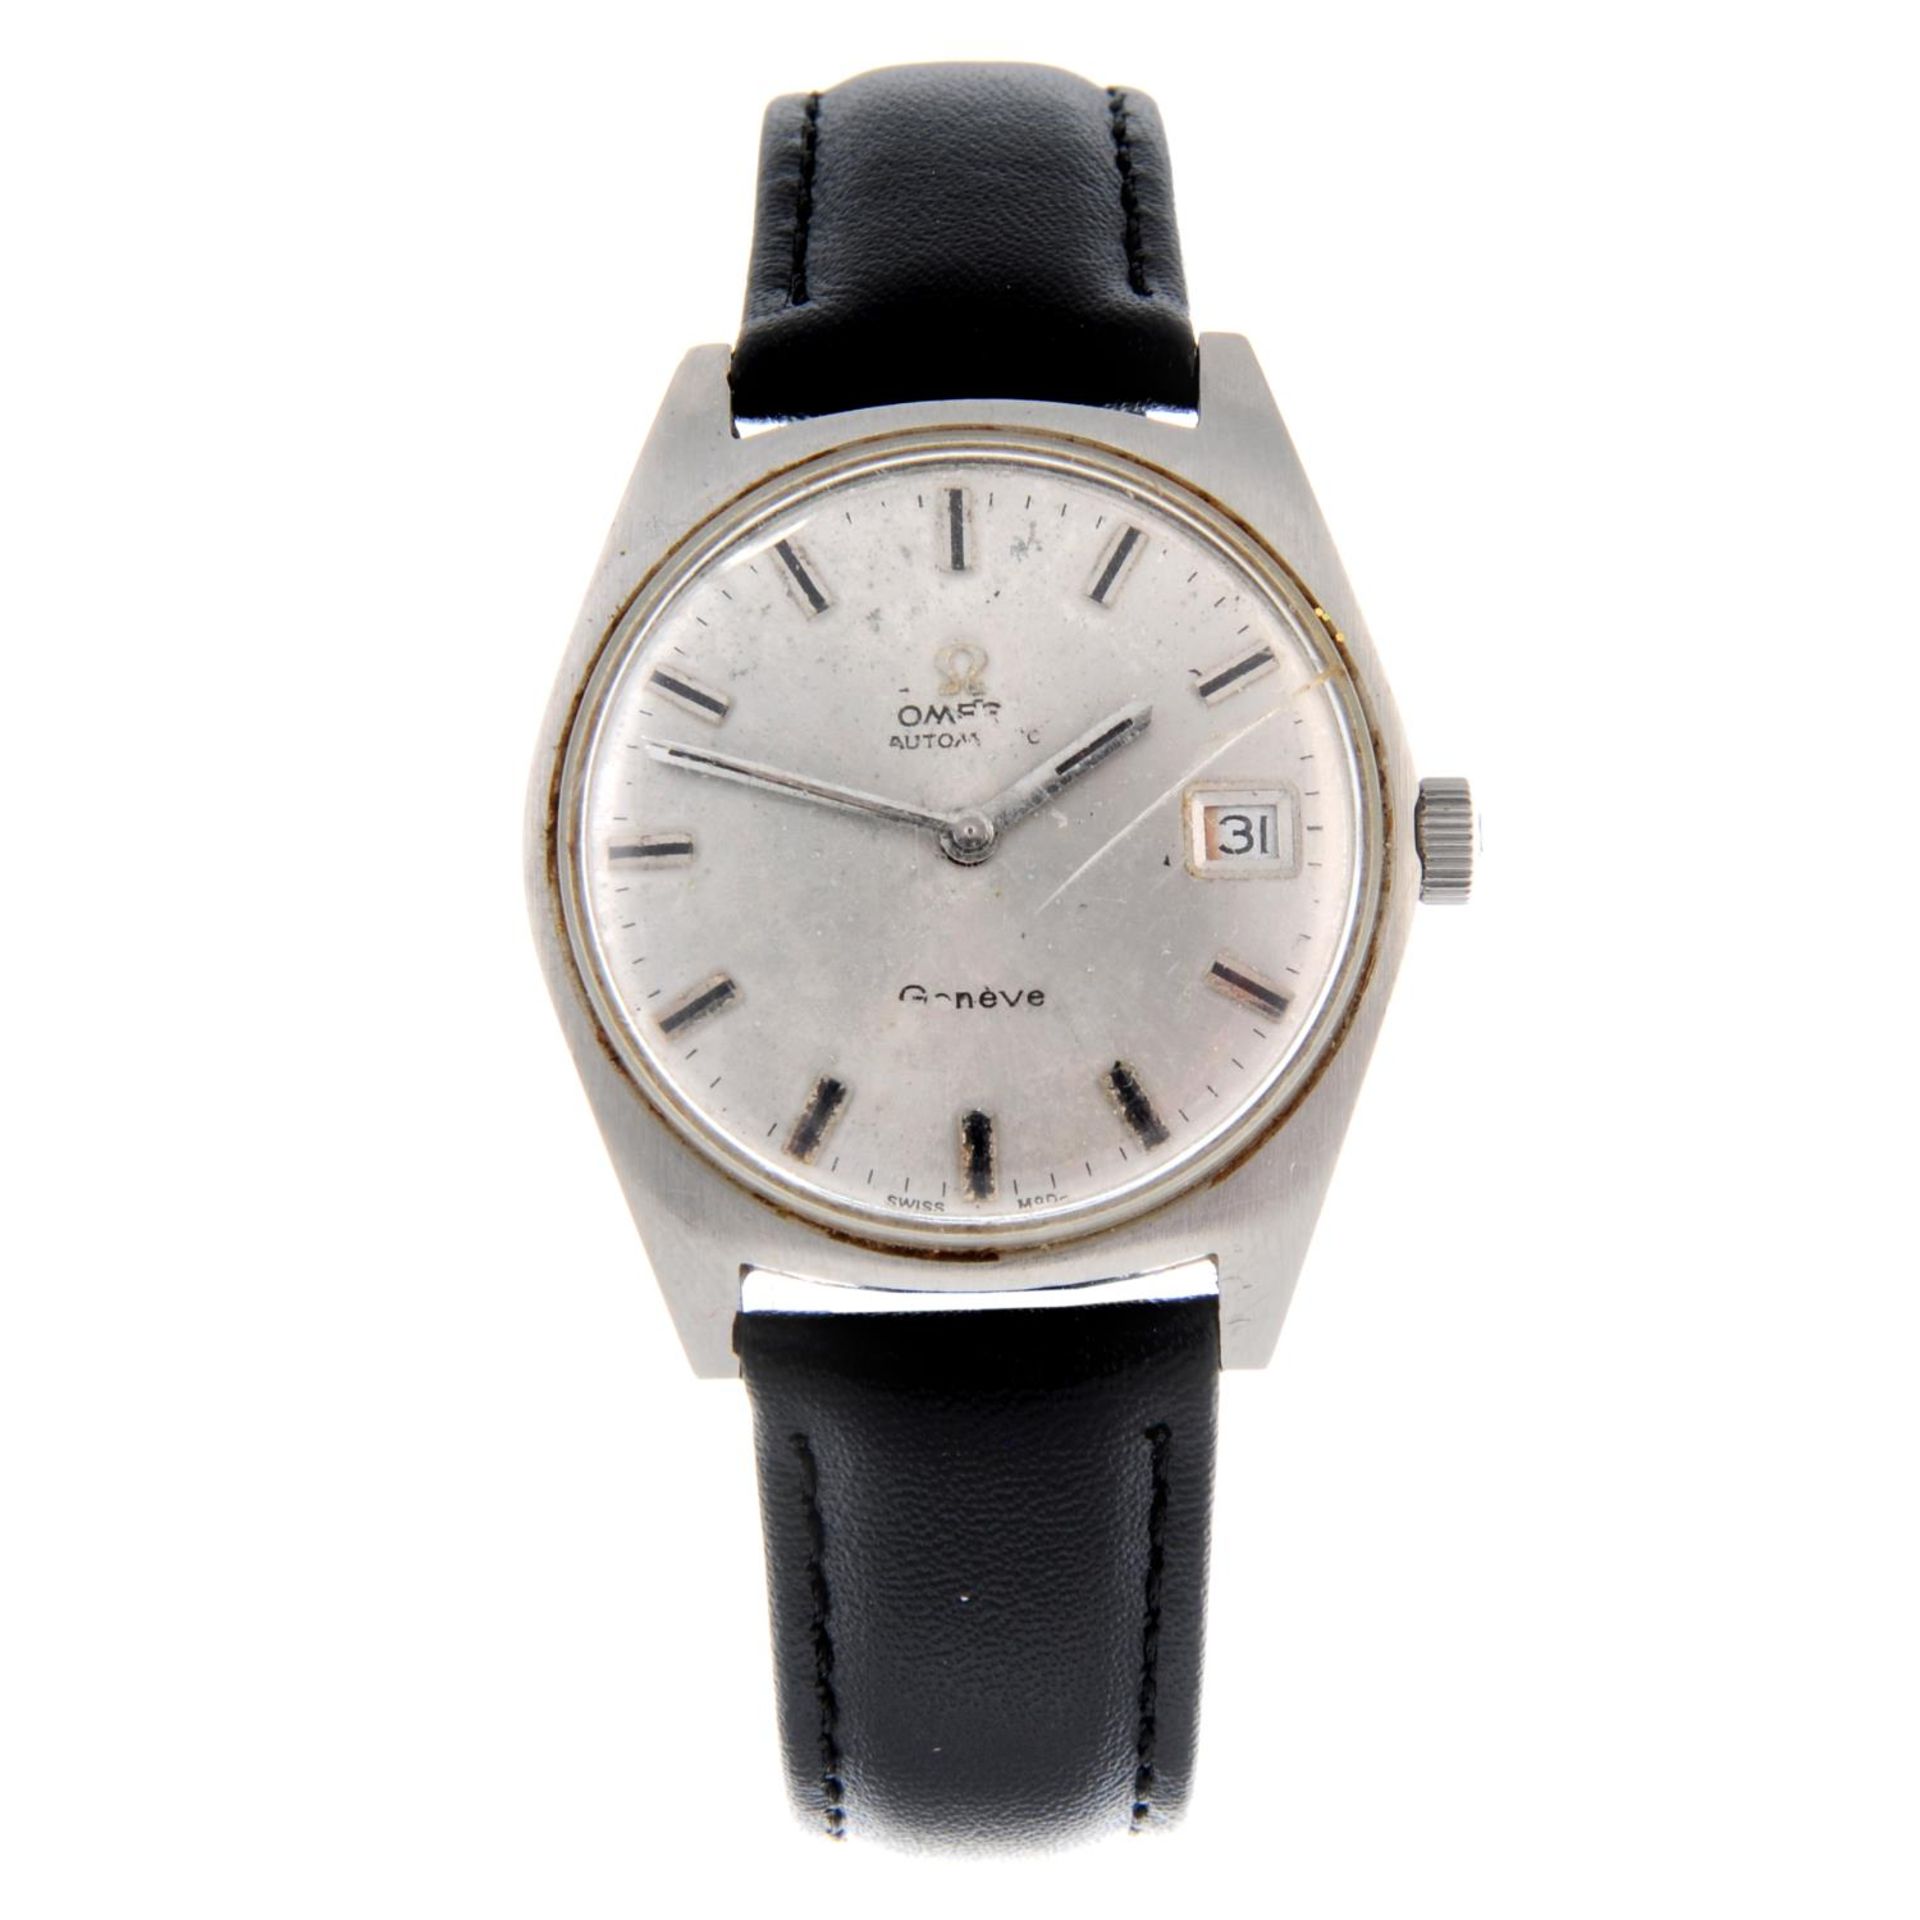 OMEGA - a Geneve wrist watch.